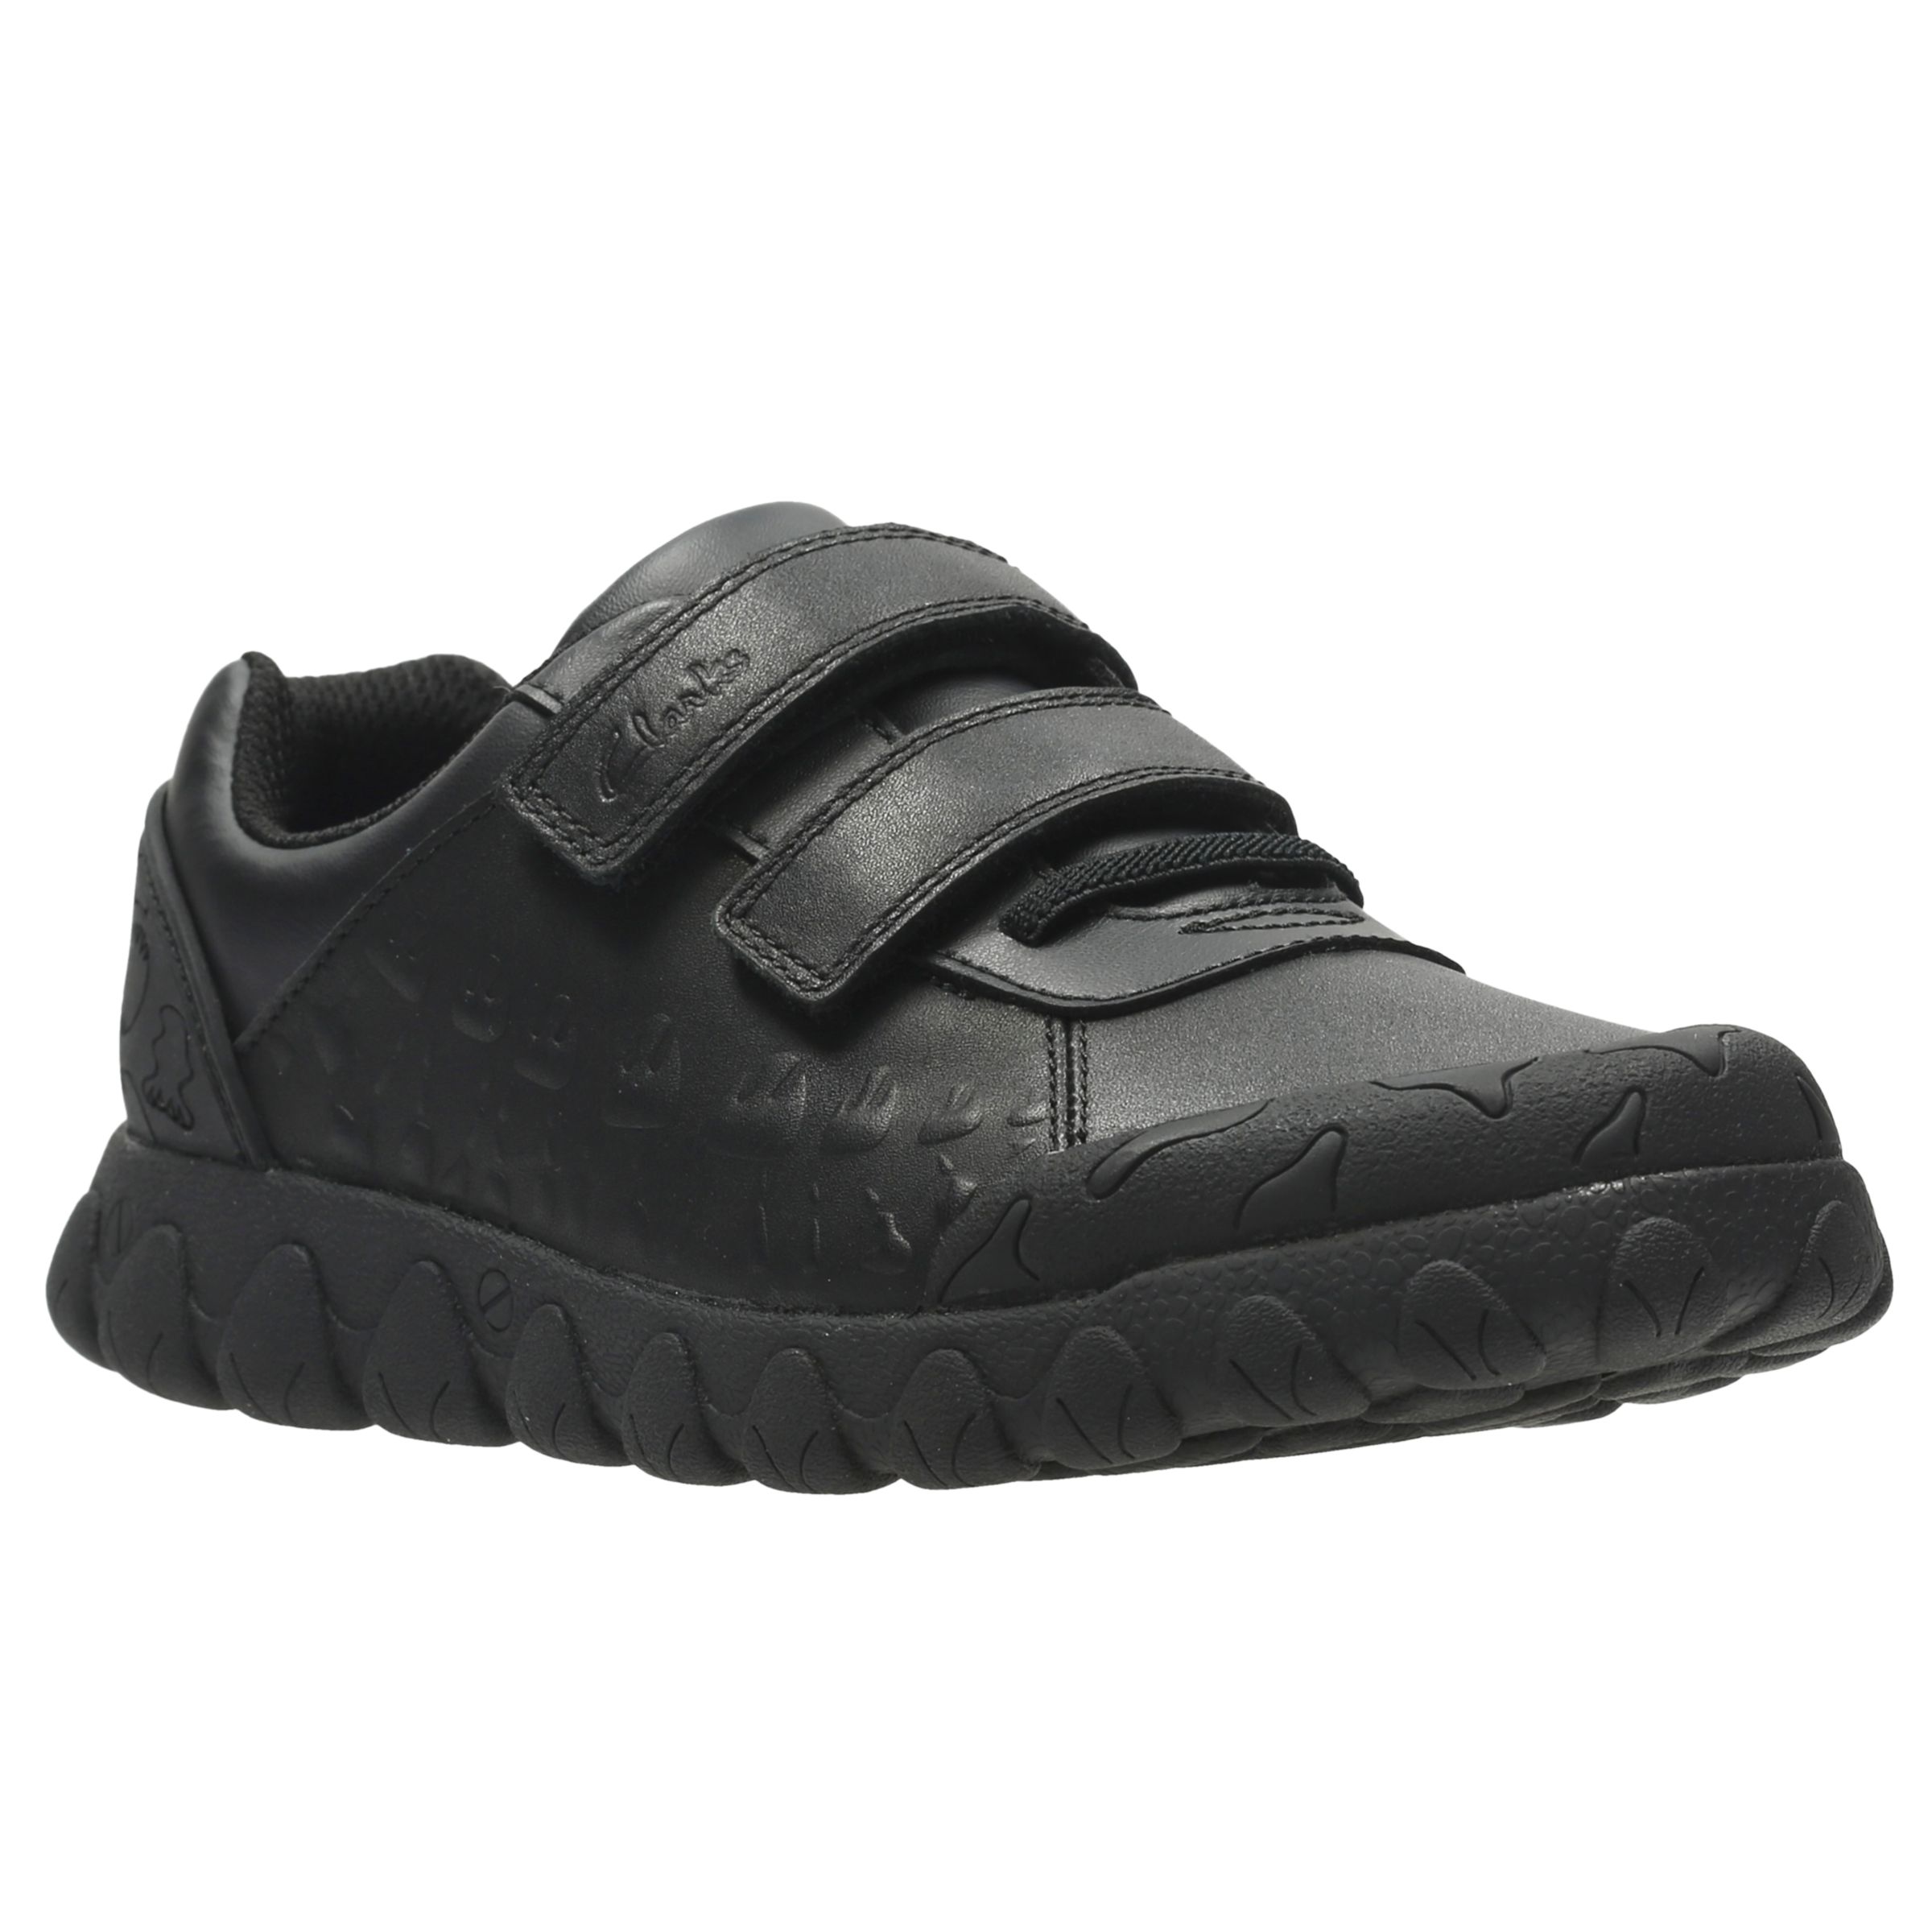 Tyrex Ride Leather School Shoes, Black 